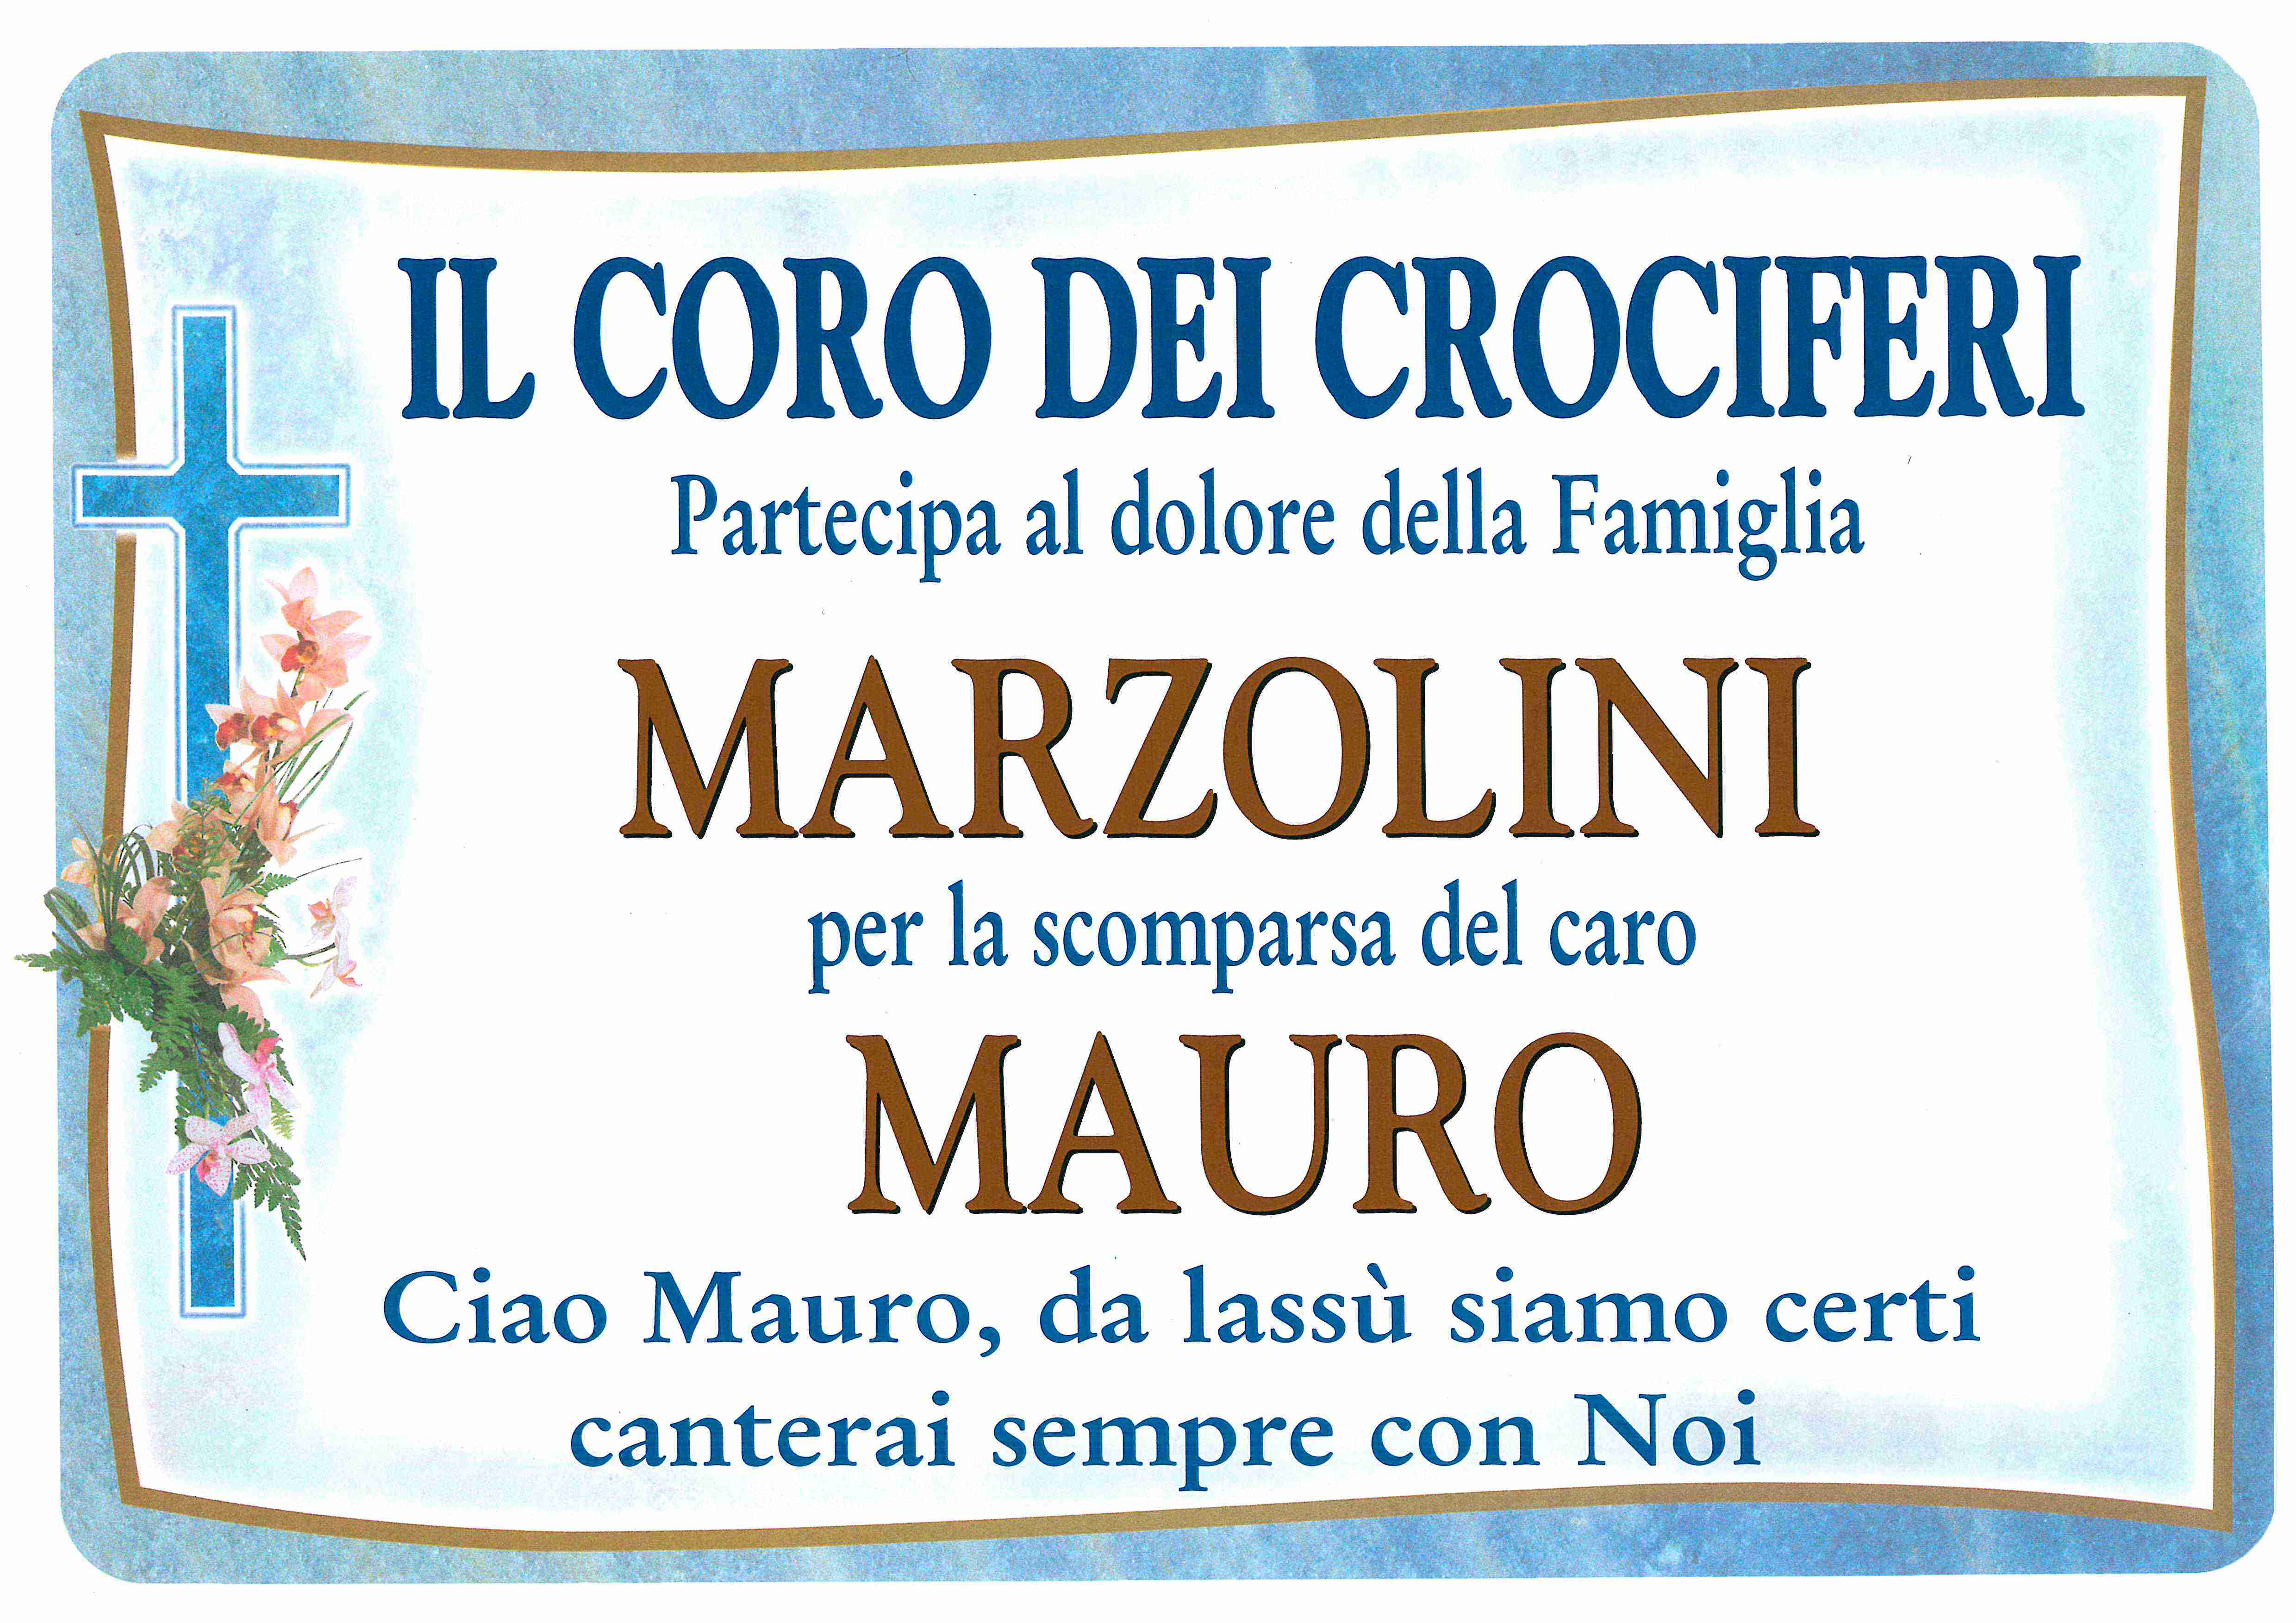 Mauro Marzolini